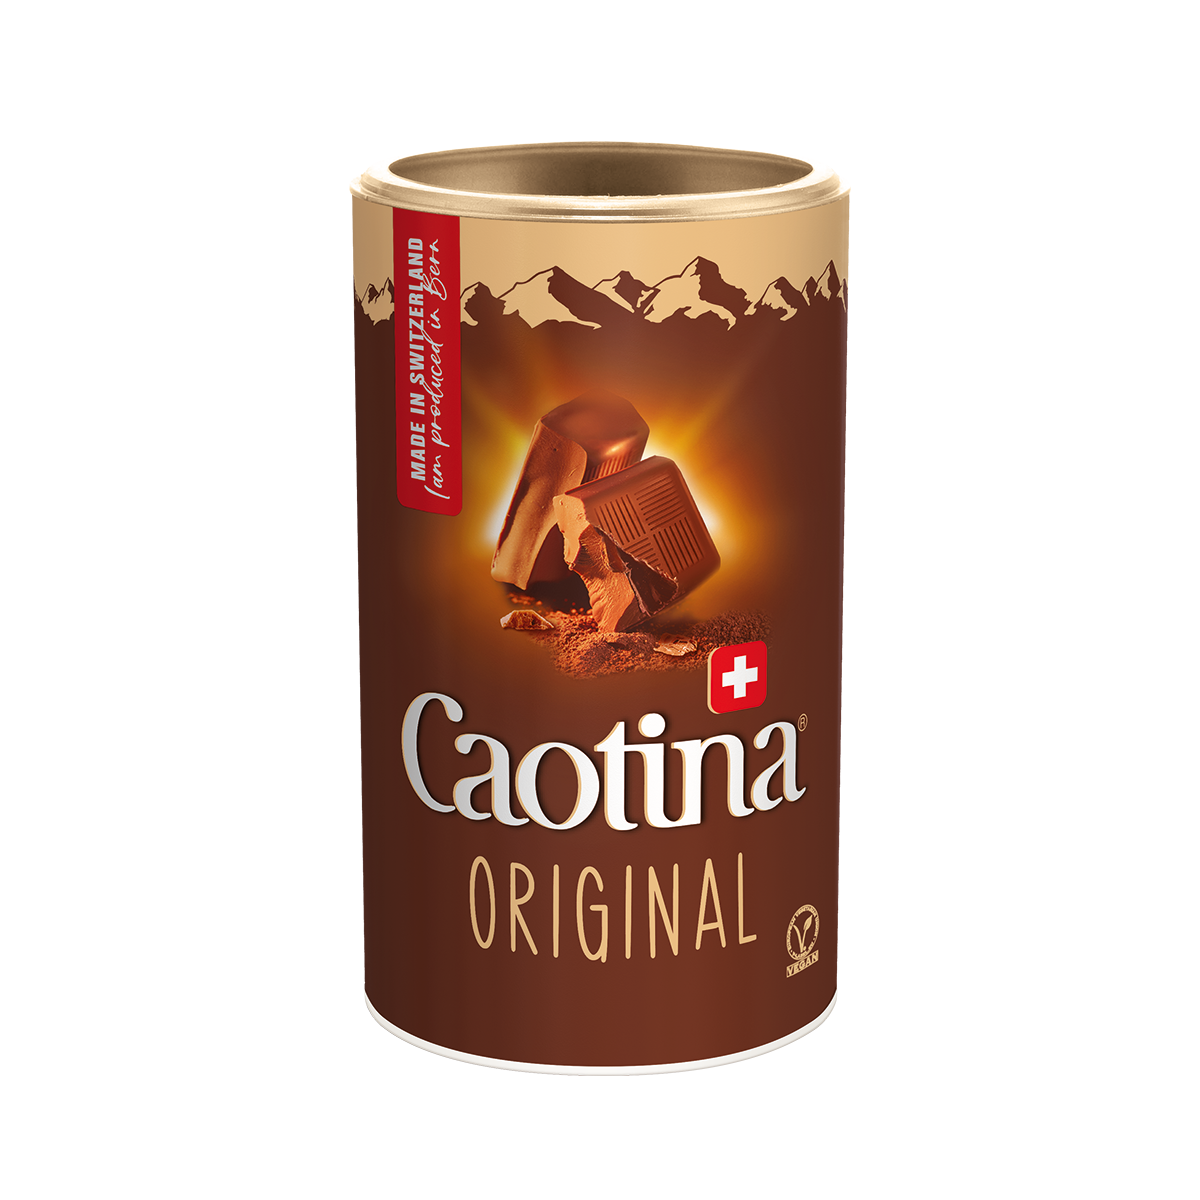  Caotina Original - la poudre de cacao au chocolat suisse